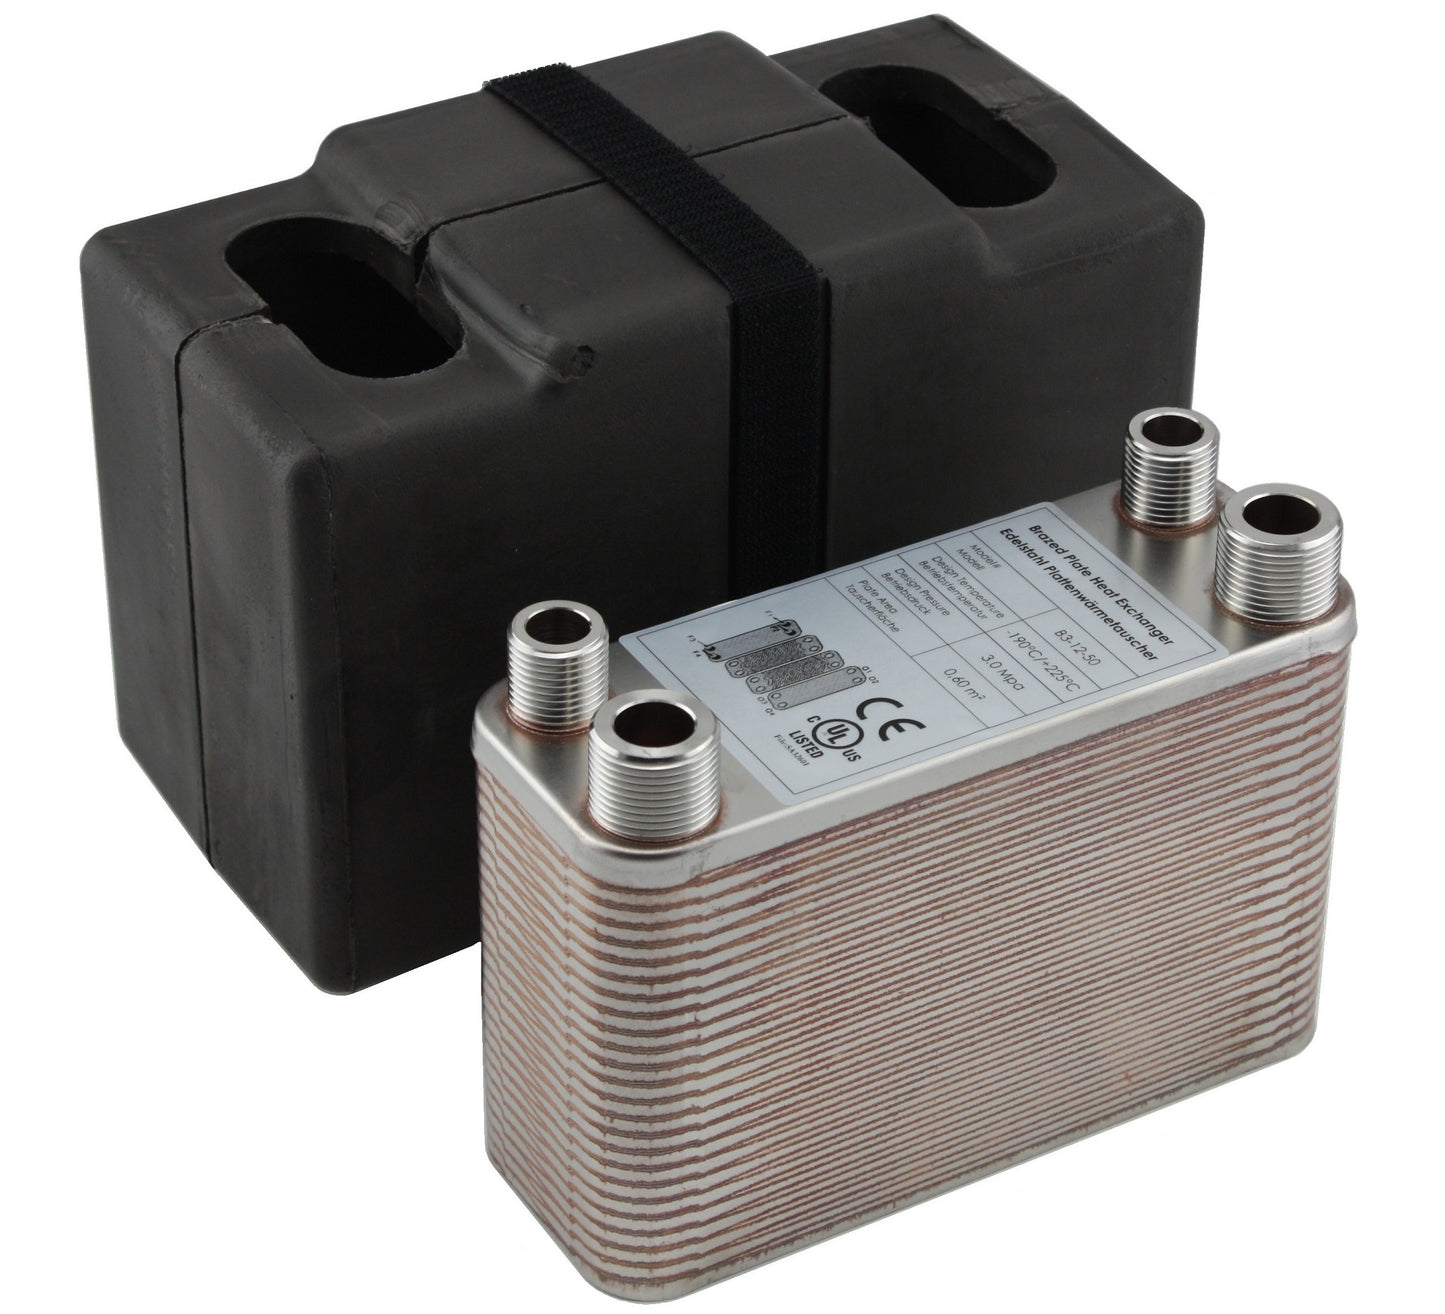 Intercambiador de calor de placas B3-12-50 - 90kW, 50 placas